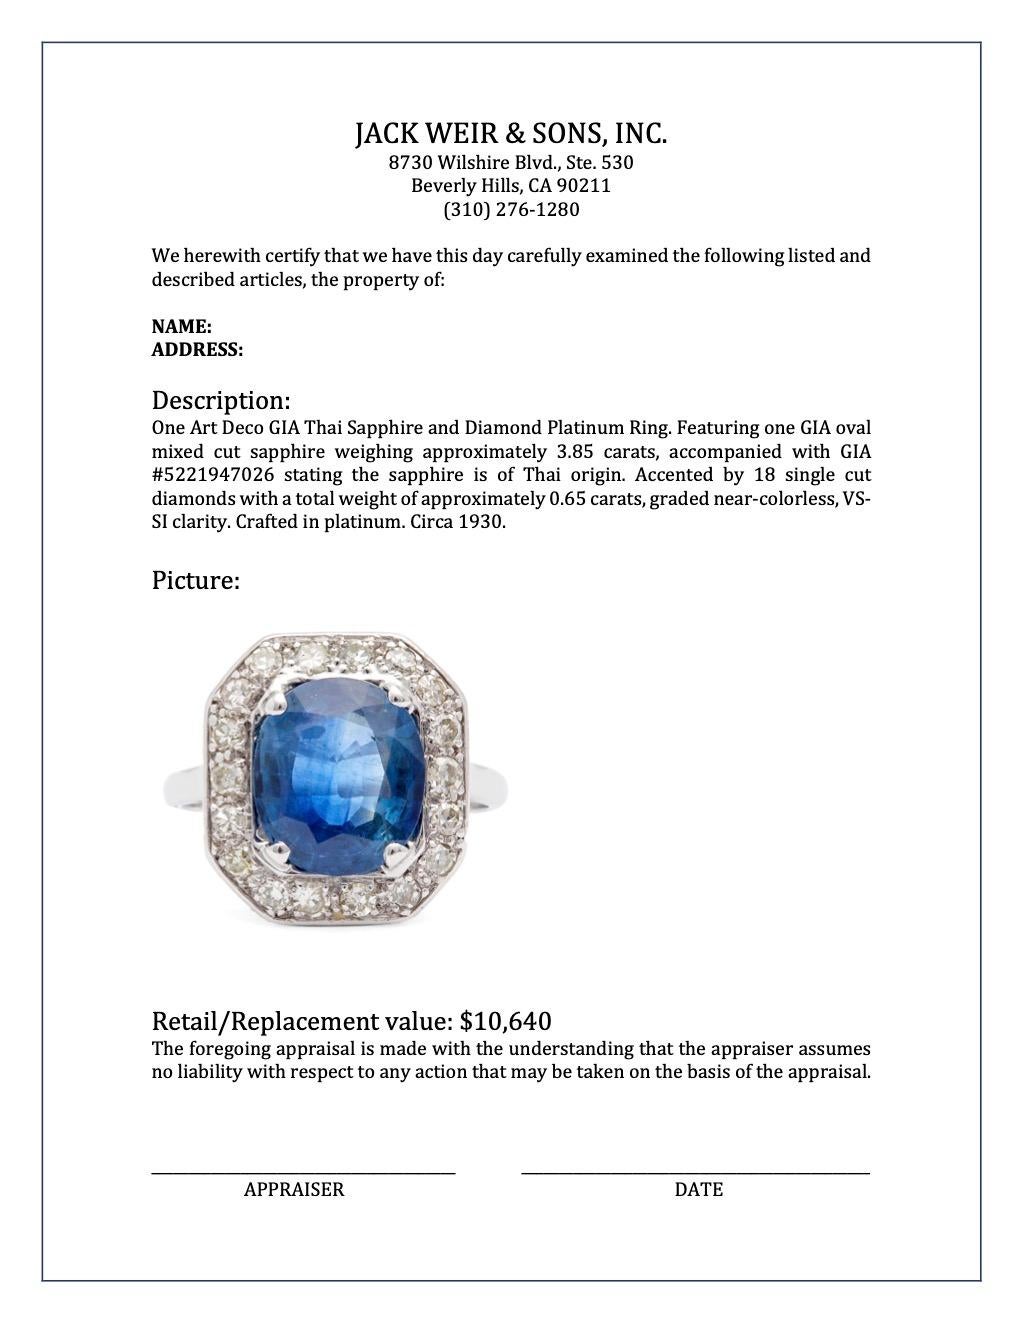 Art Deco GIA Thai Sapphire and Diamond Platinum Ring 3